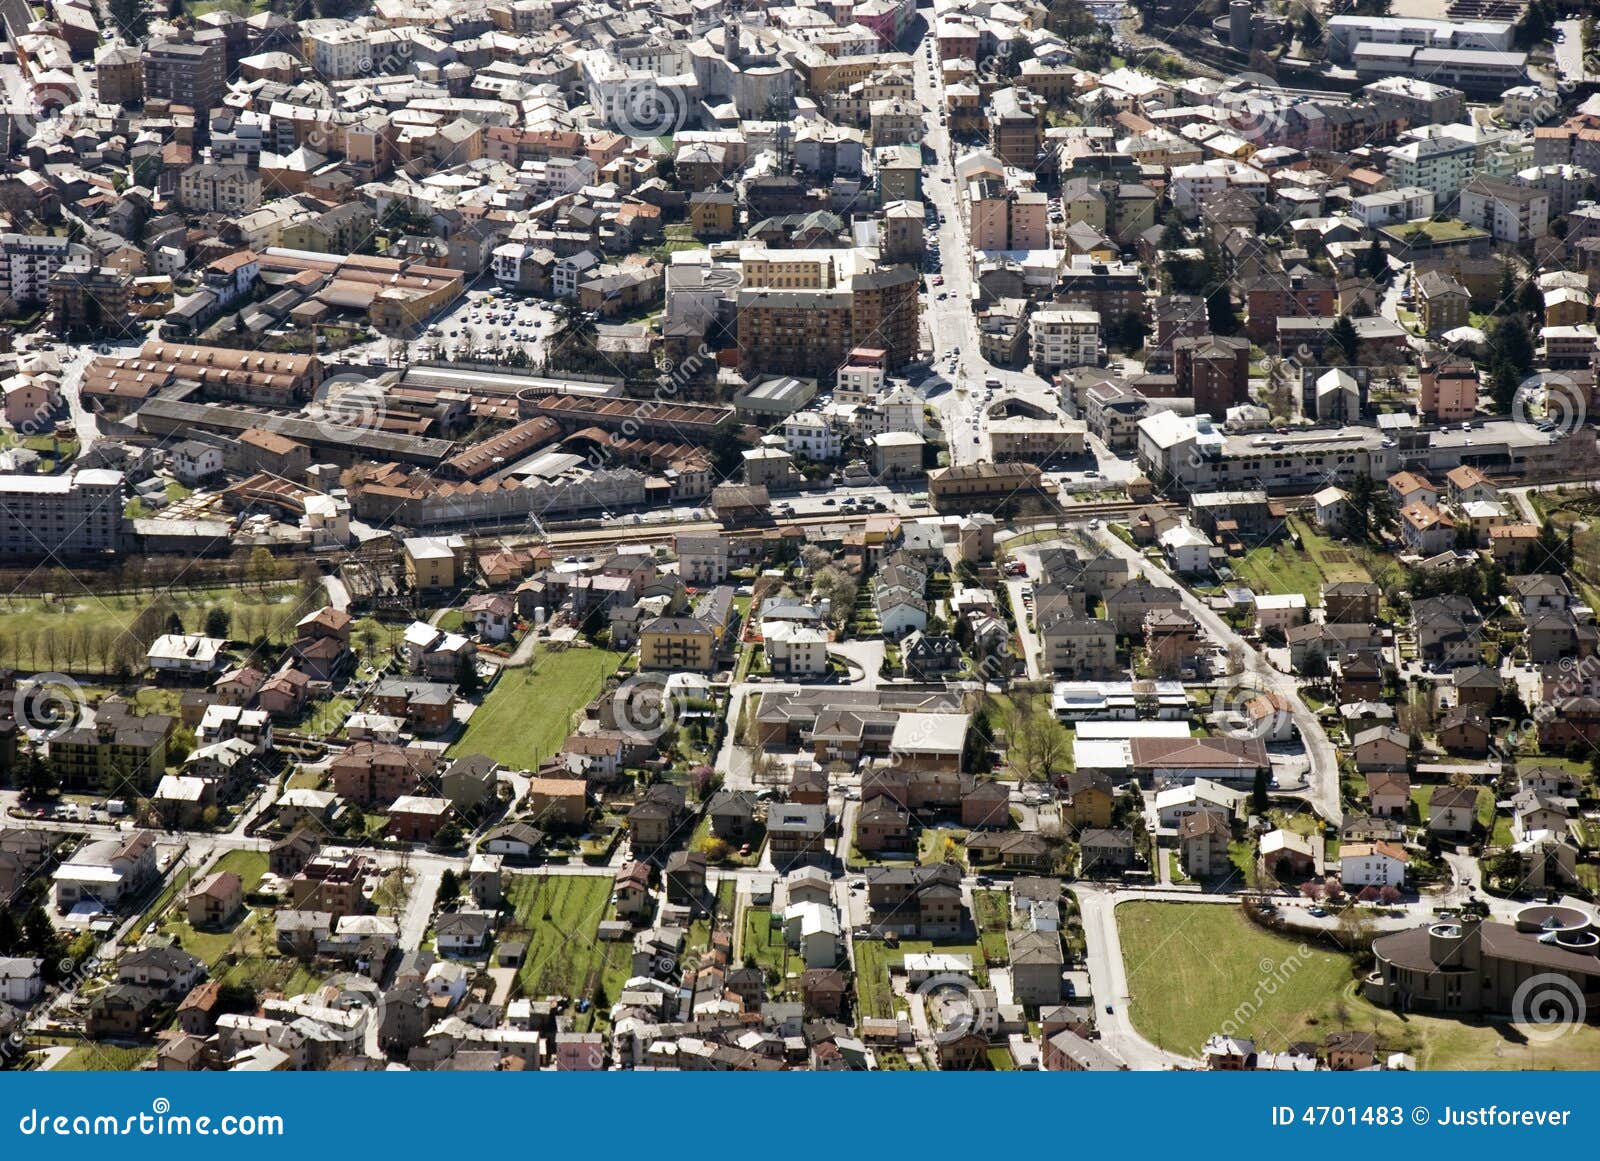 aerial view of residential urban sprawl